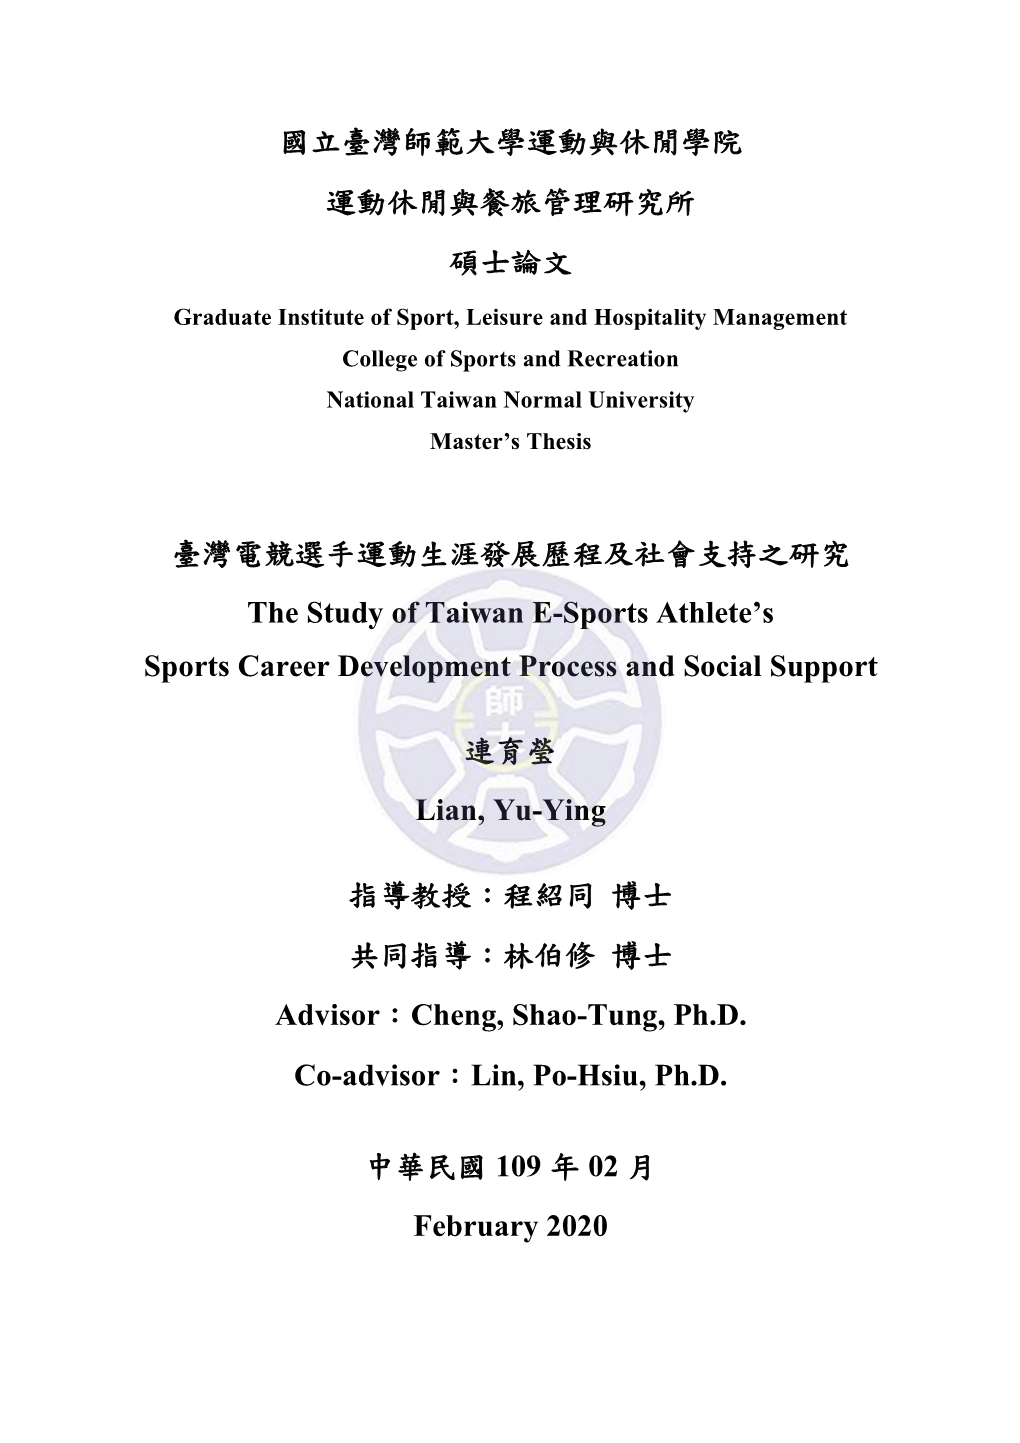 The Study of Taiwan E-Sports Athlete's Sports Career Development